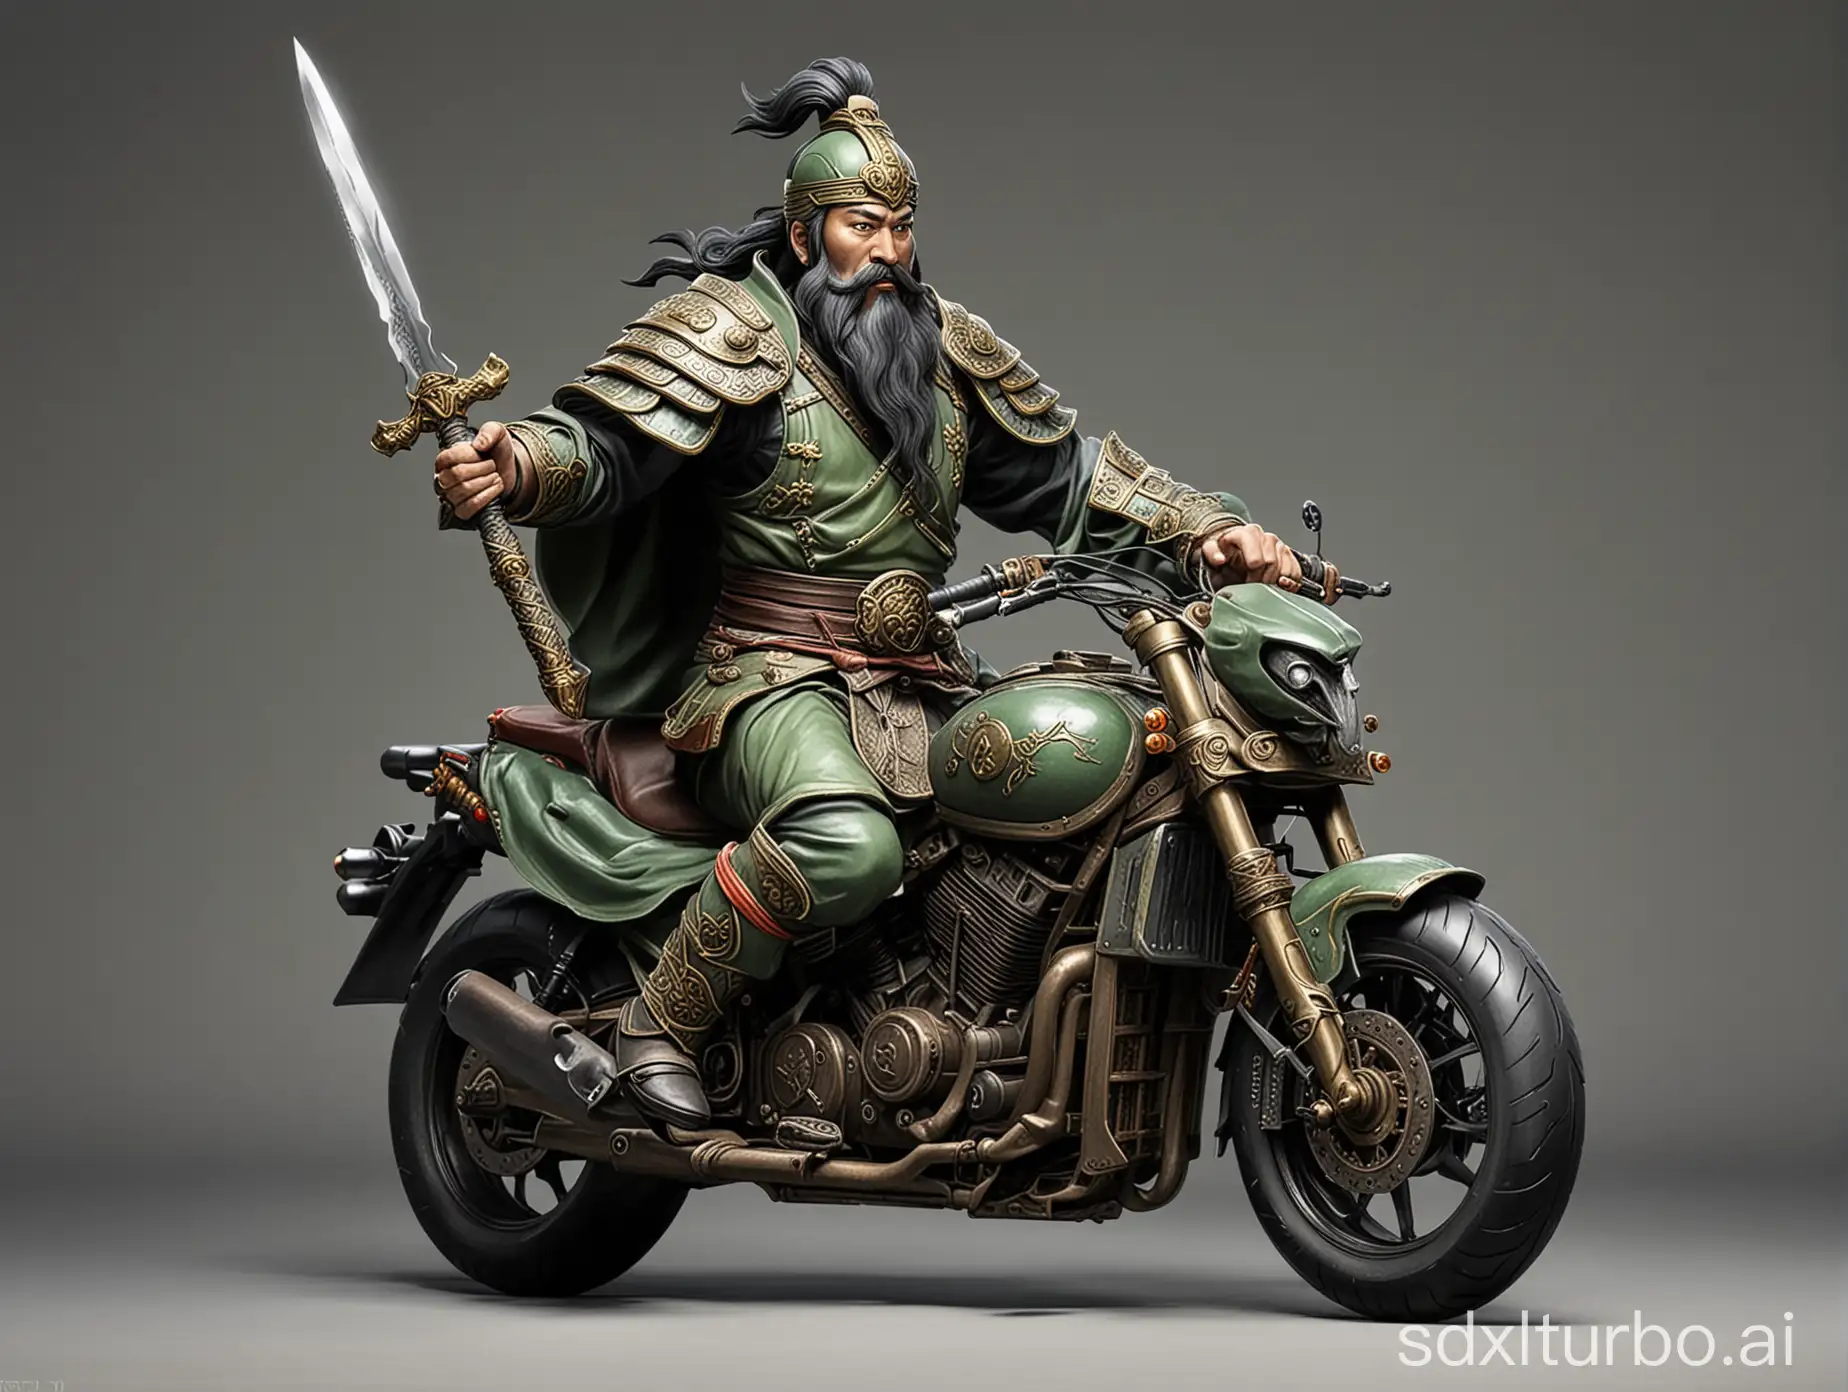 Draw a Guan Yu holding a big knife riding a motorcycle